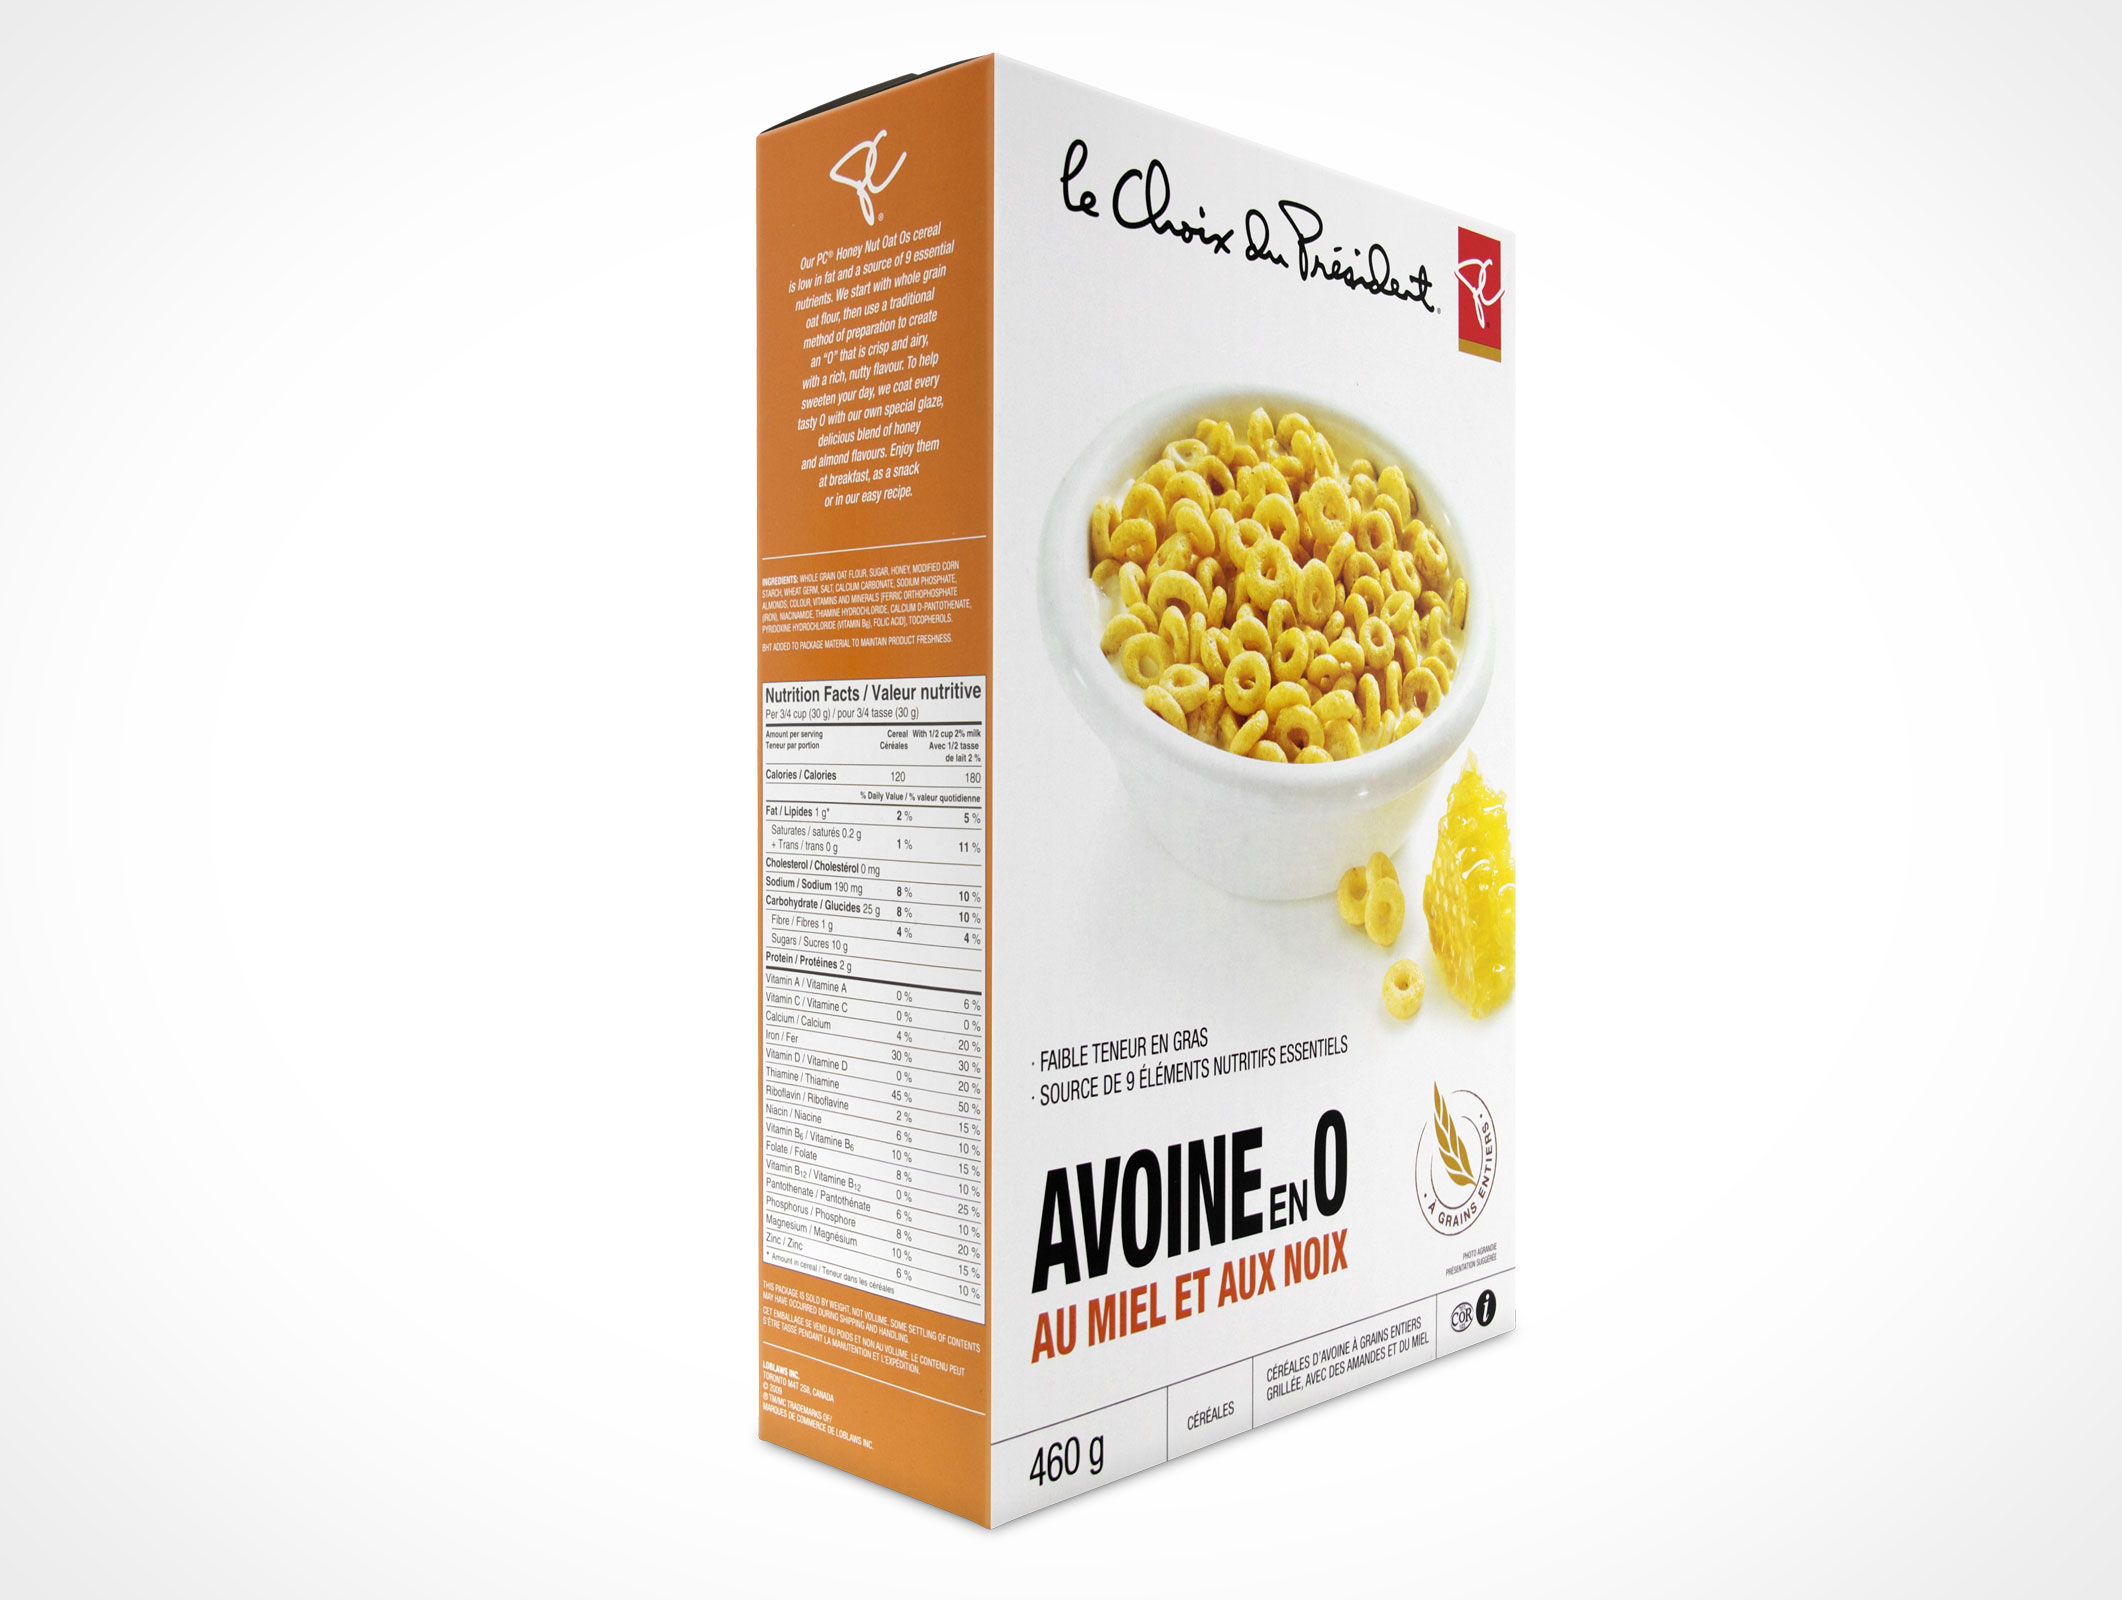 Download Psd Mockups Mockup Box Cereal Png Free Psd Mockup Apparel Mockup Easy Design